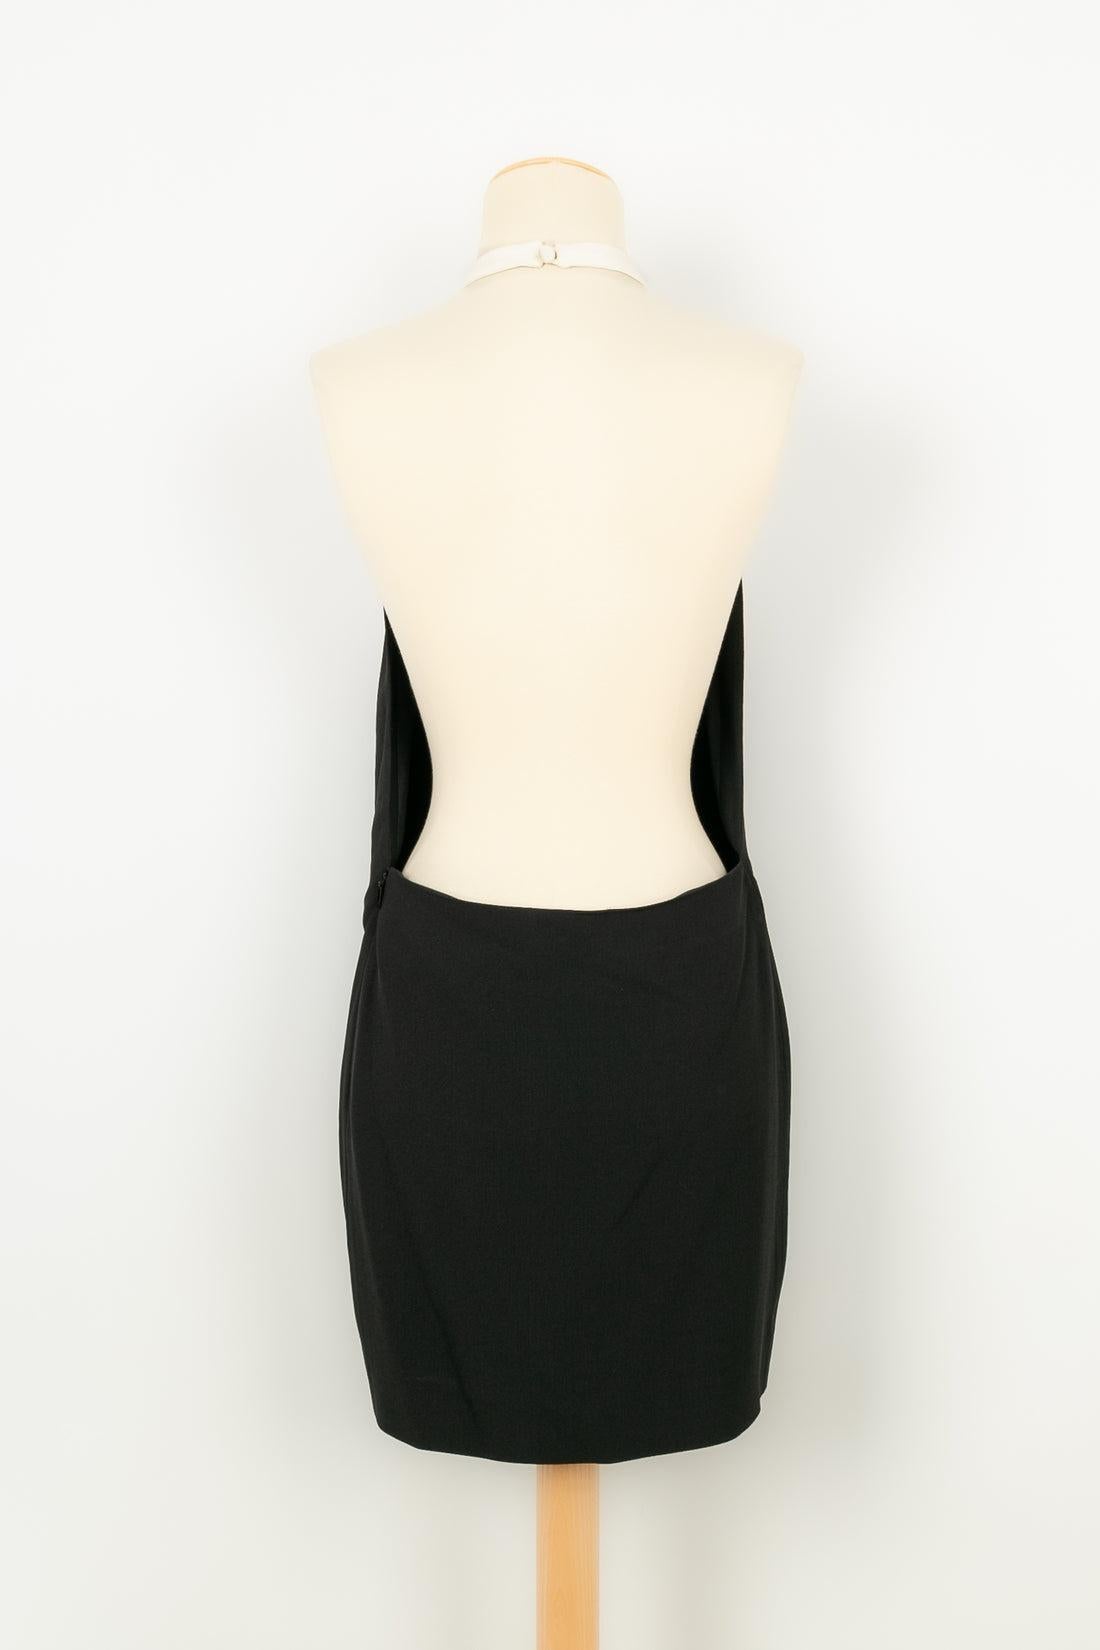 Yves Saint Laurent Short Backless Black and White Dress In Excellent Condition For Sale In SAINT-OUEN-SUR-SEINE, FR